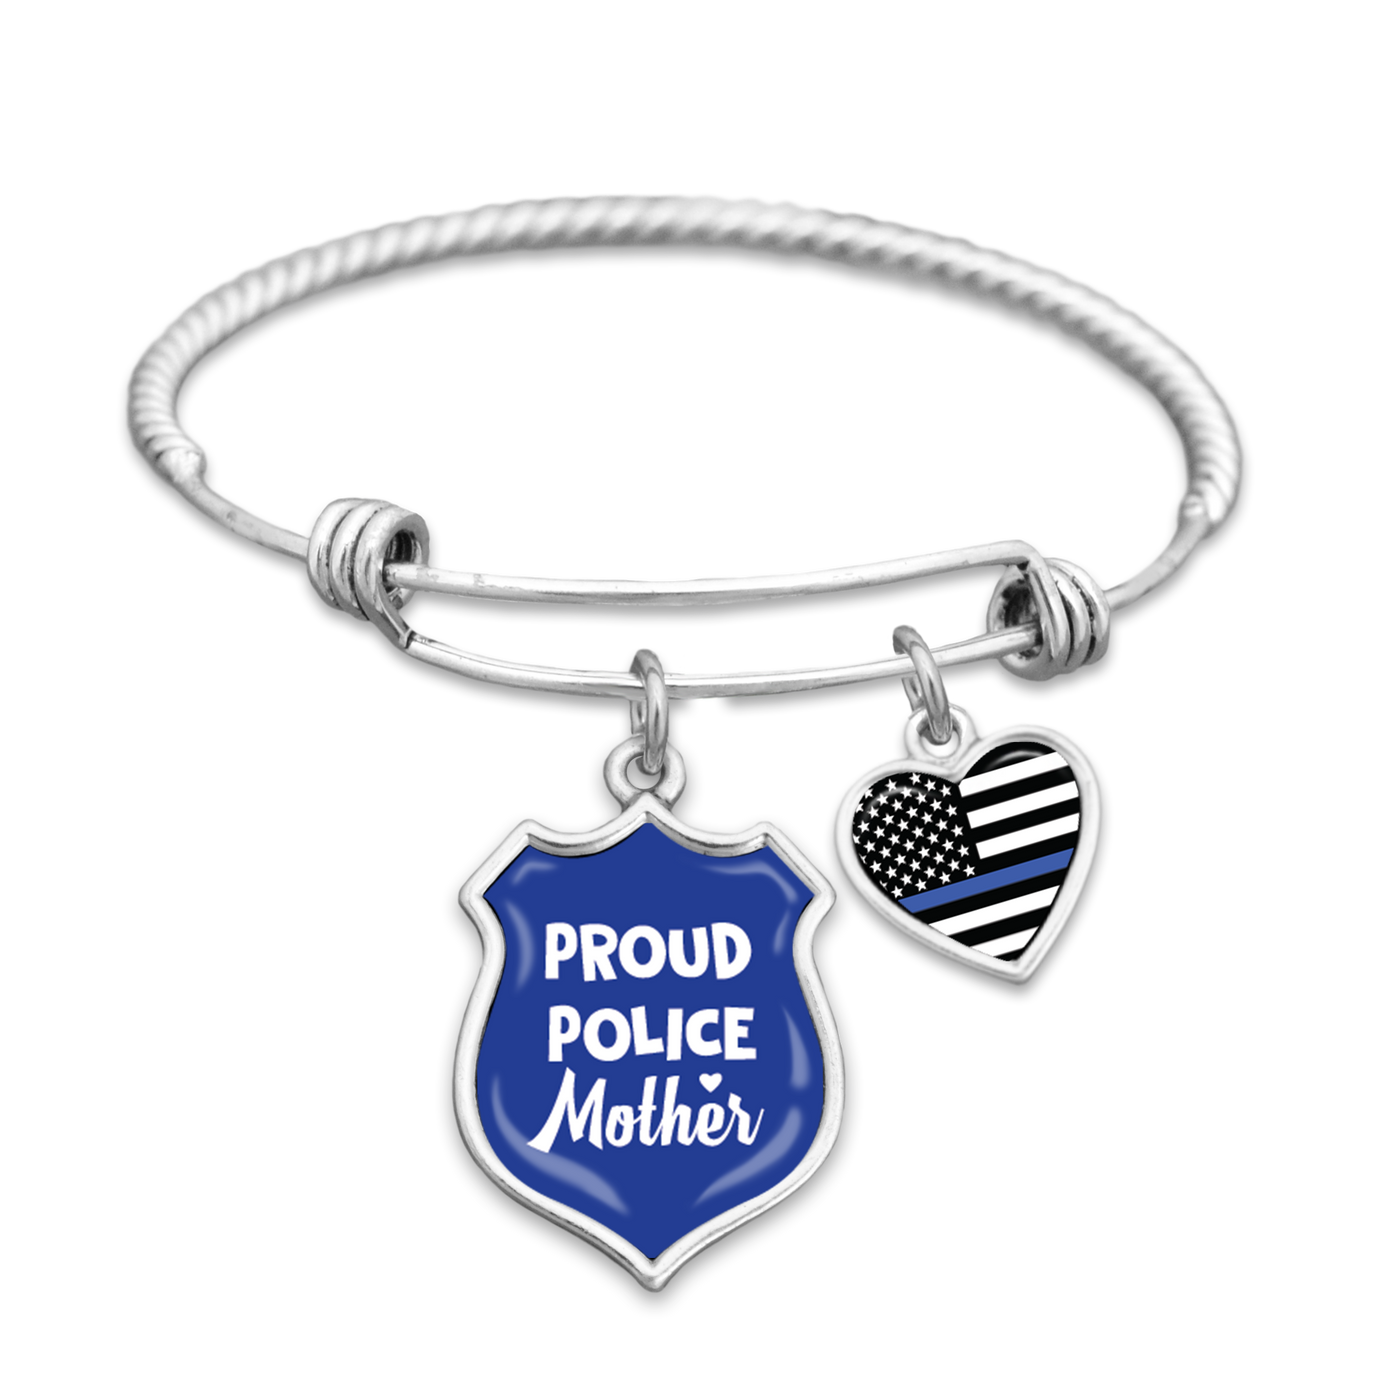 Proud Police Mother Charm Bracelet